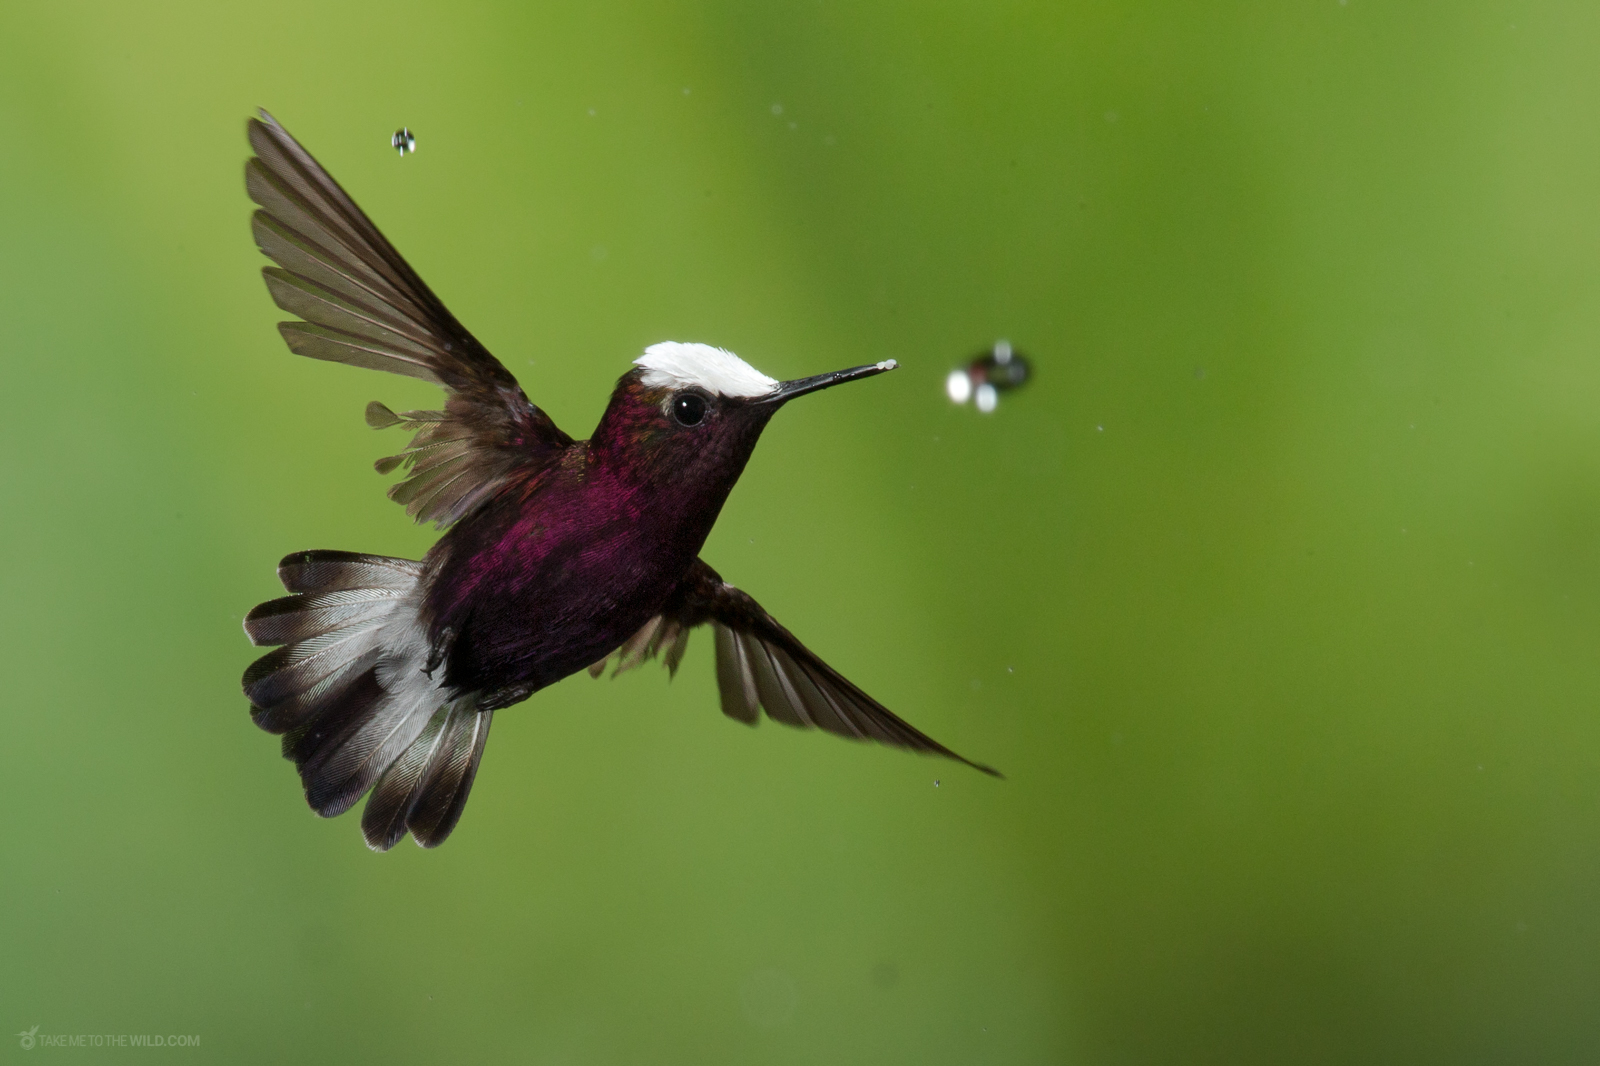 Snowcap (Microchera albocoronata) in flight under the rain with water drop at the low lands of Costa Rica